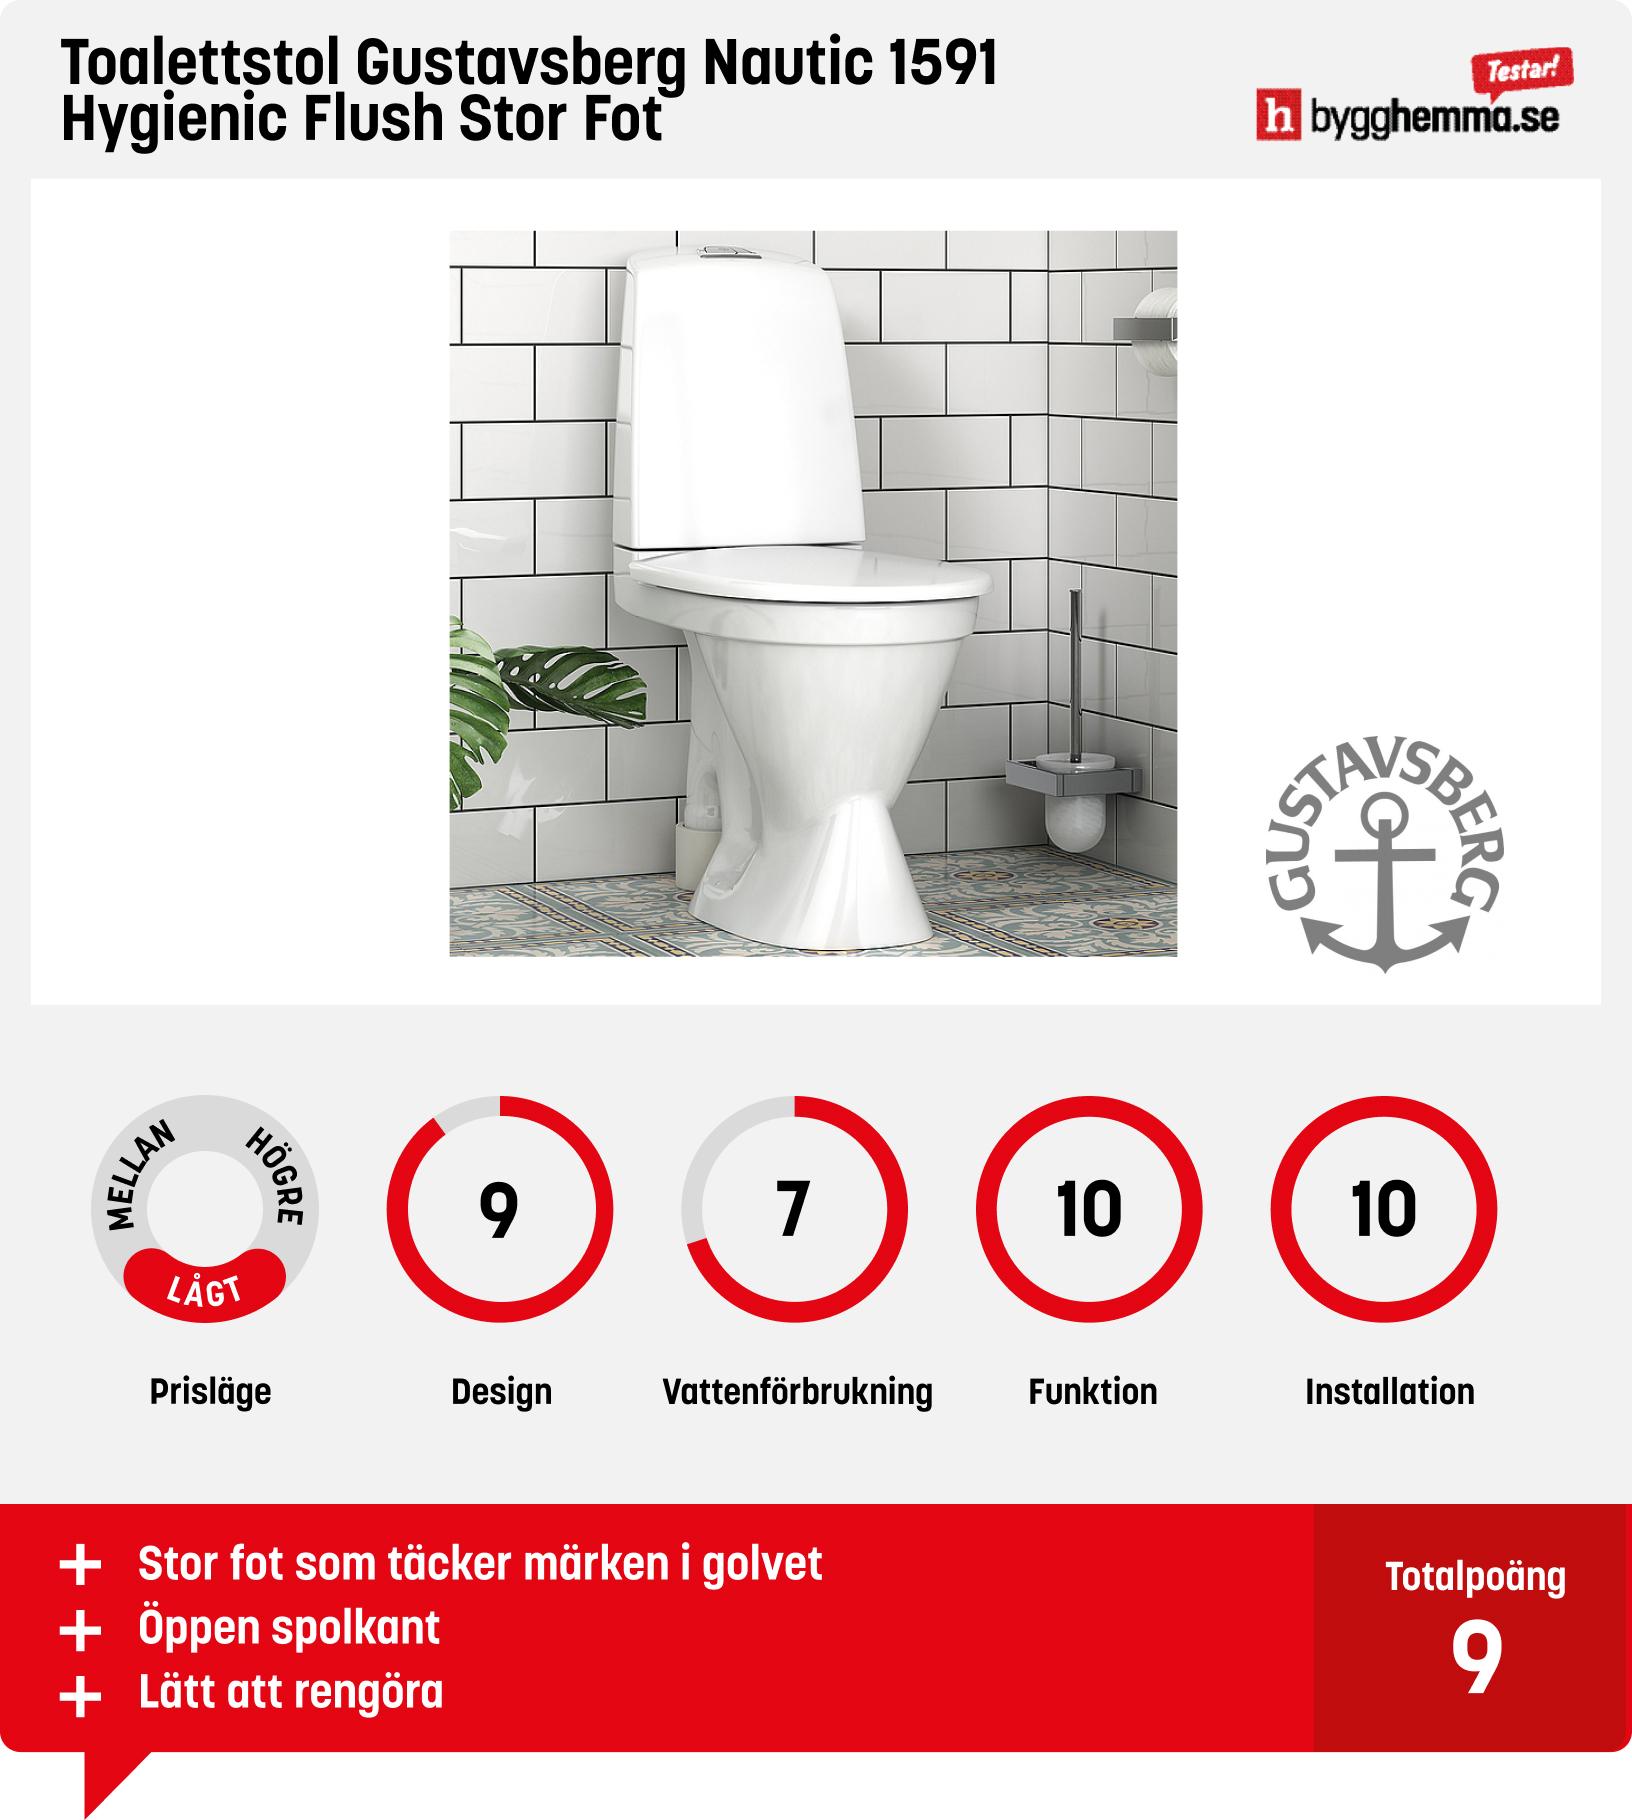 Snålspolande toalett bäst i test - Toalettstol Gustavsberg Nautic 1591 Hygienic Flush Stor Fot